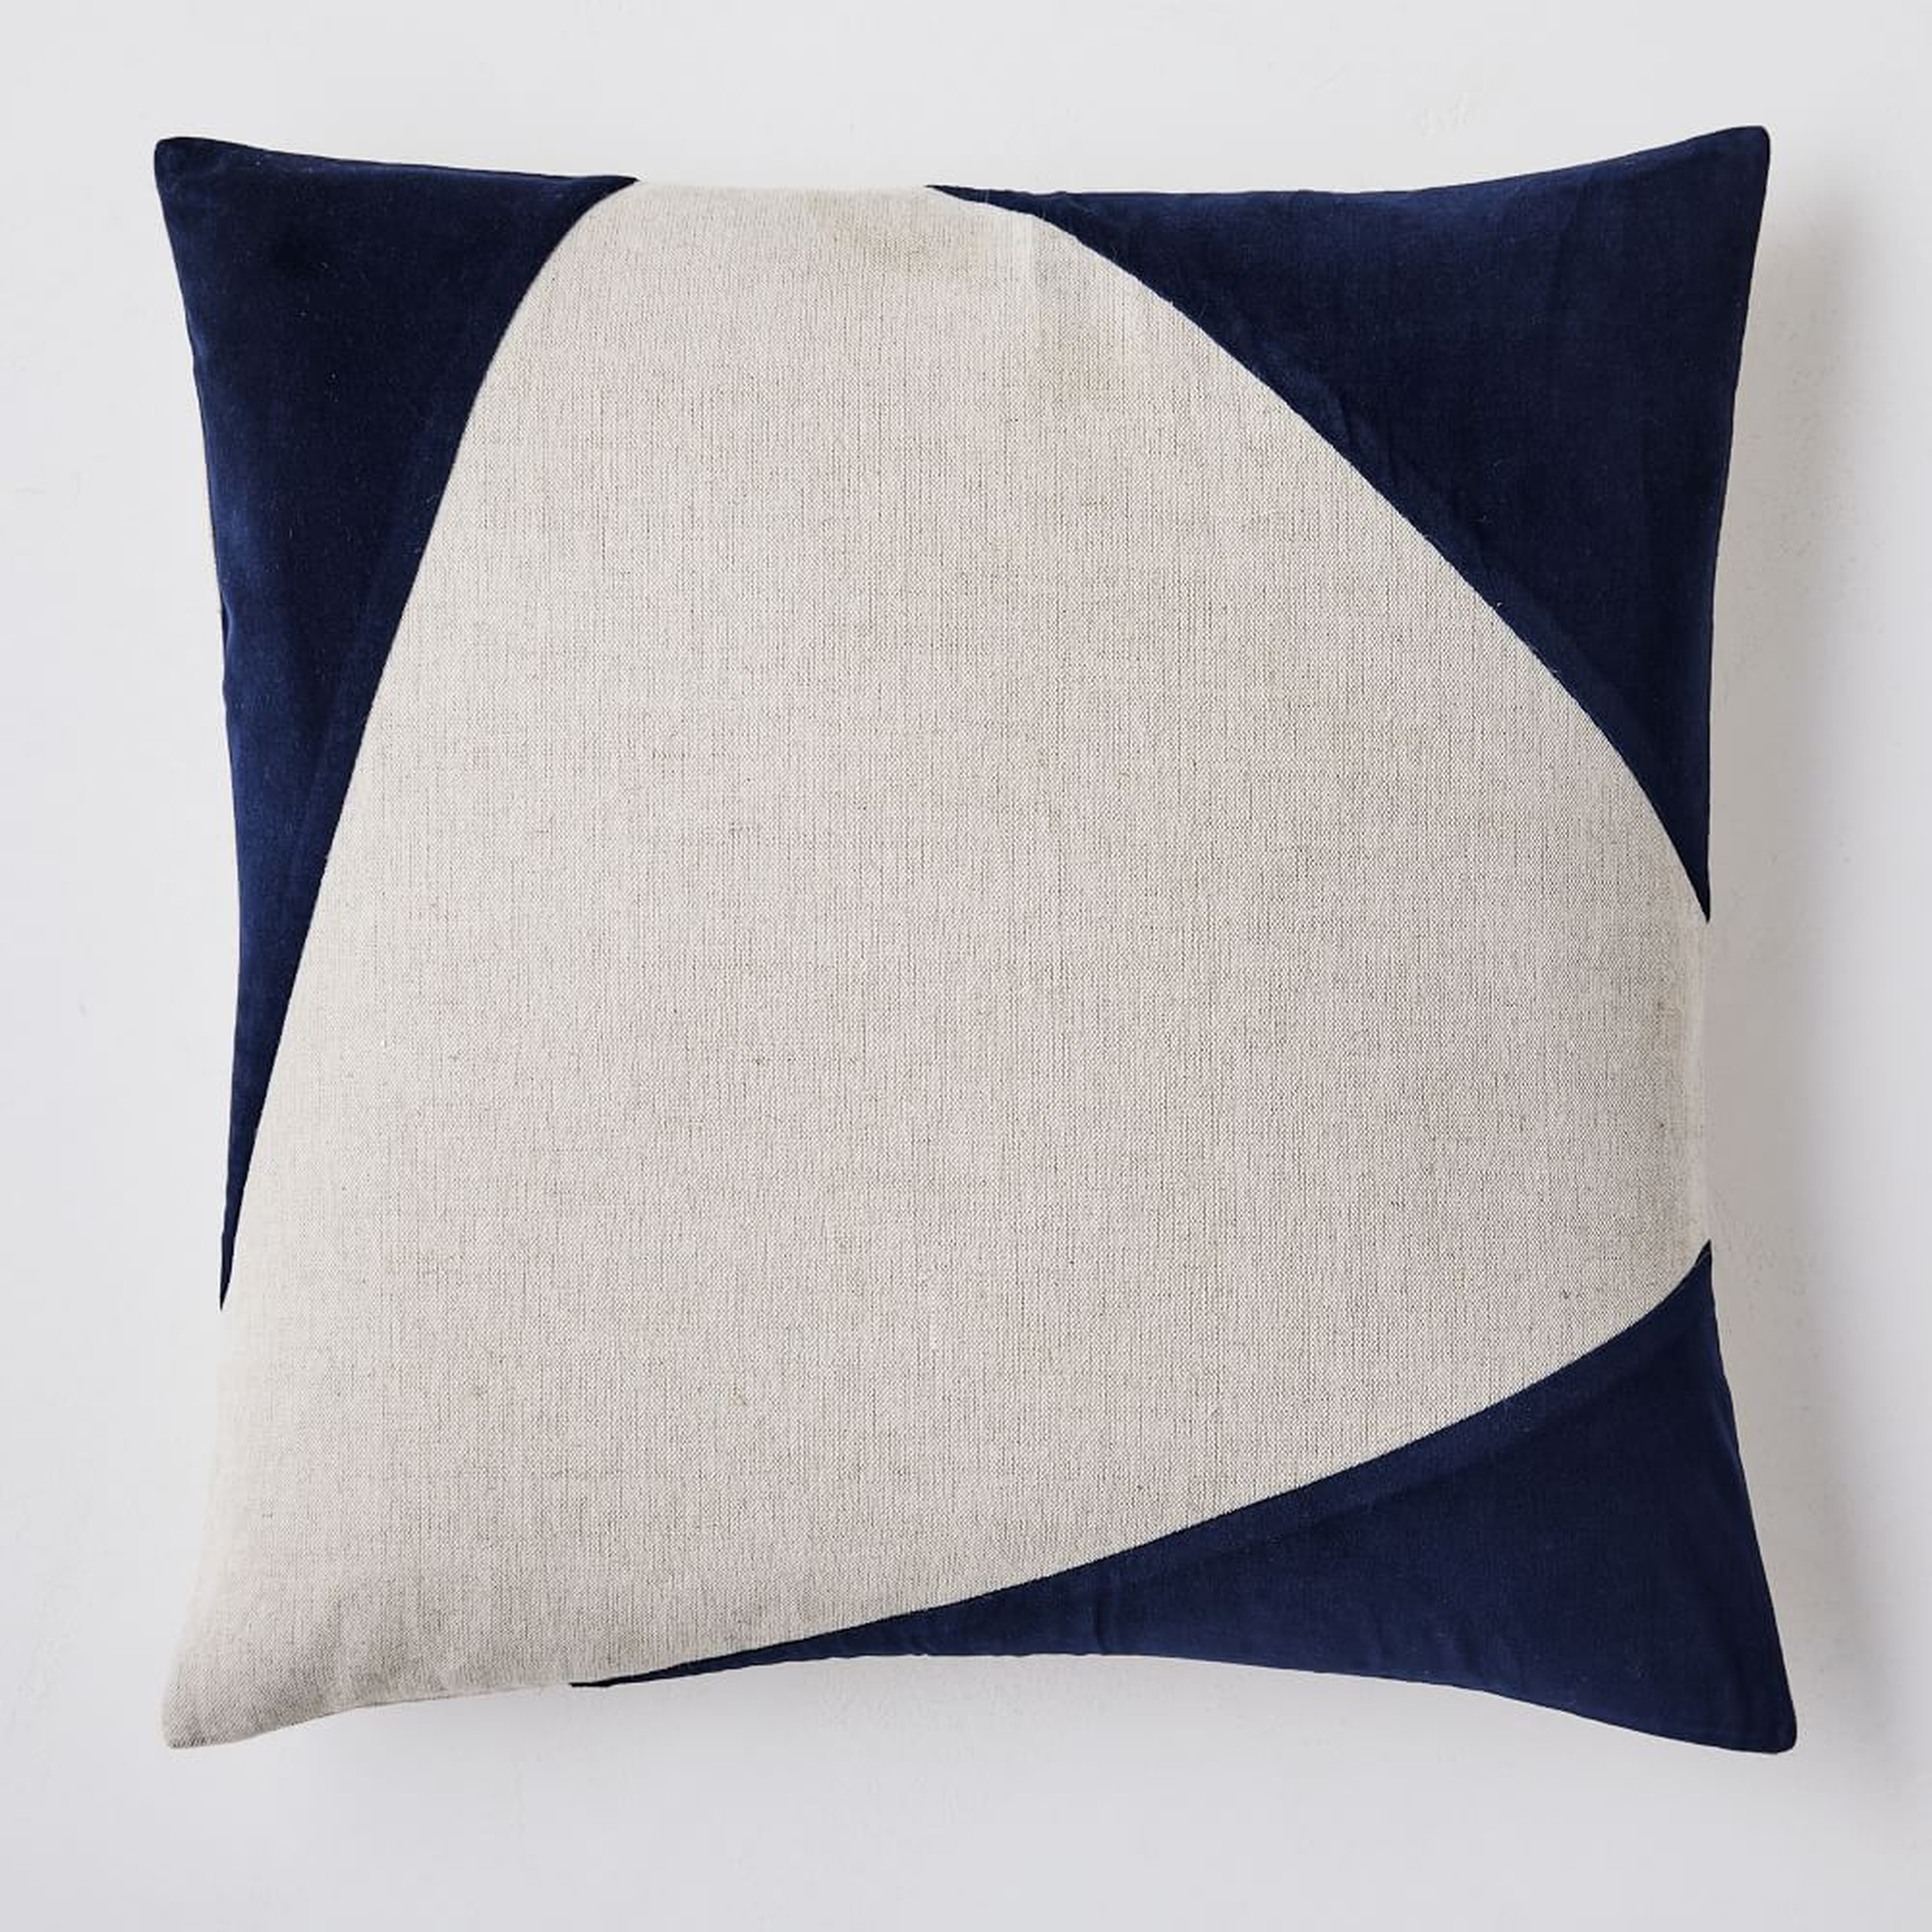 Cotton Linen + Velvet Corners Pillow Cover, 24"x24", Midnight, Set of 2 - West Elm